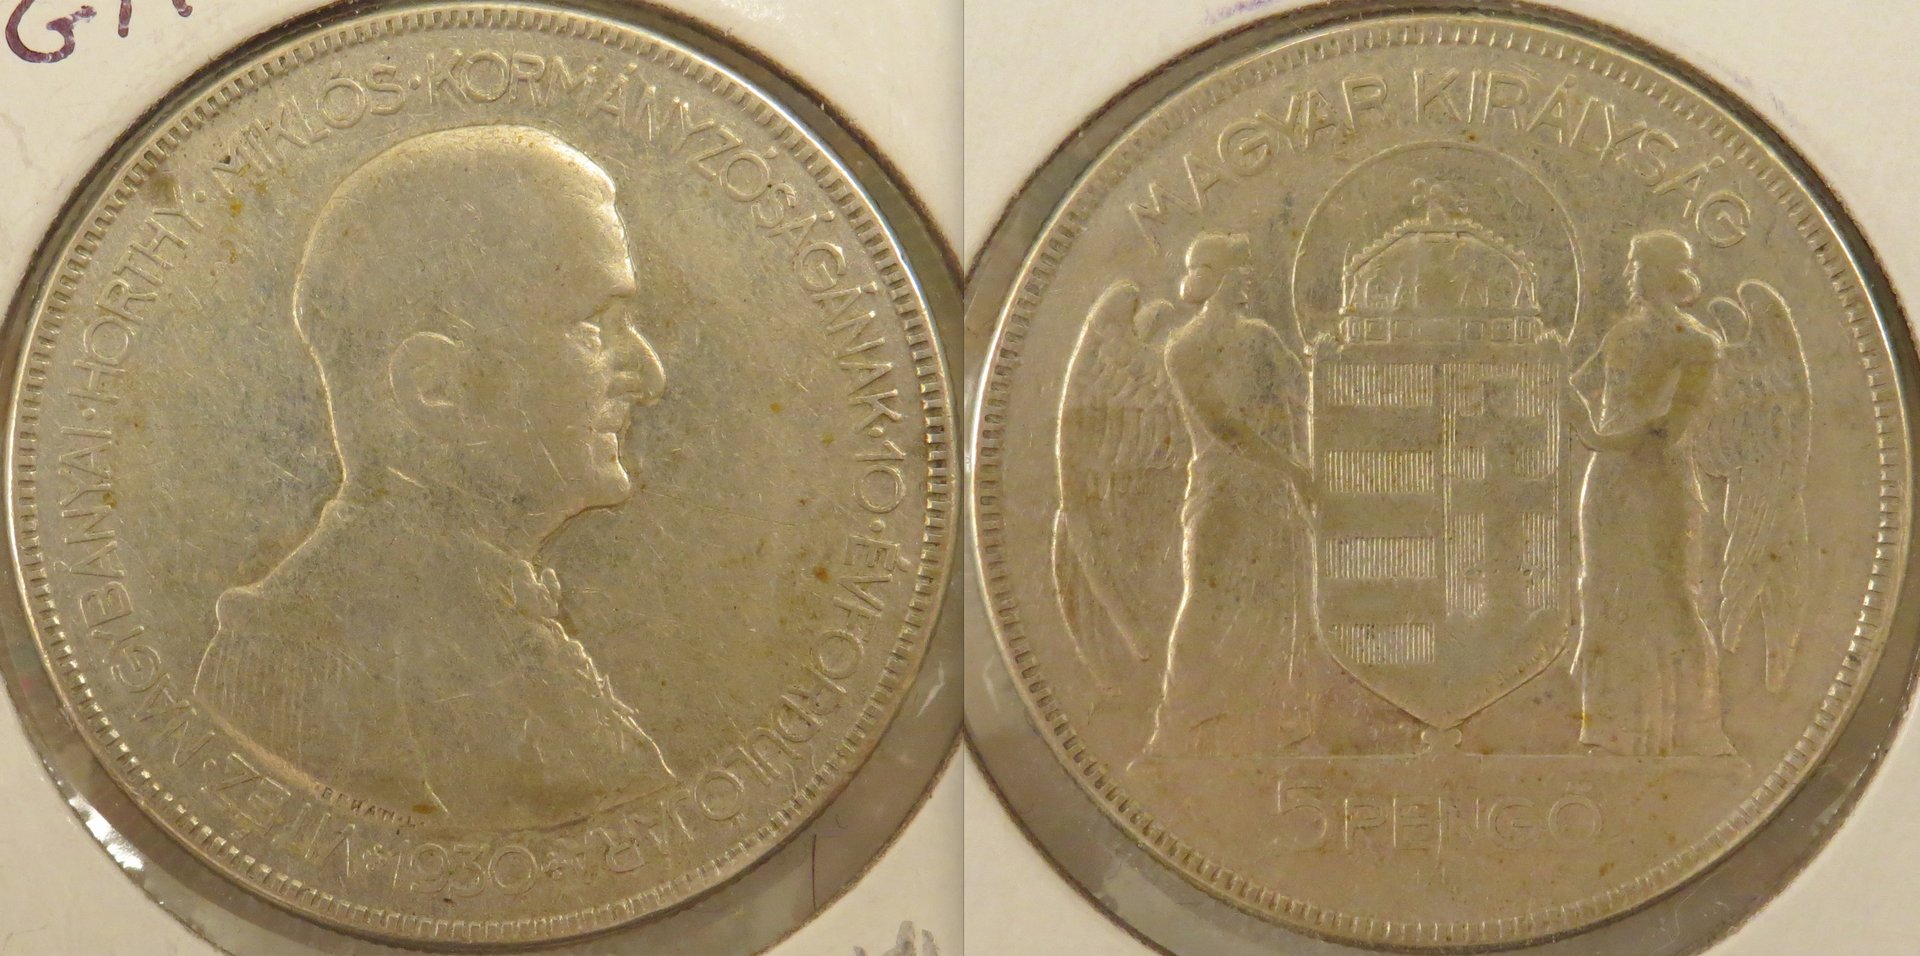 Hungary 5 pengő 1930.jpeg